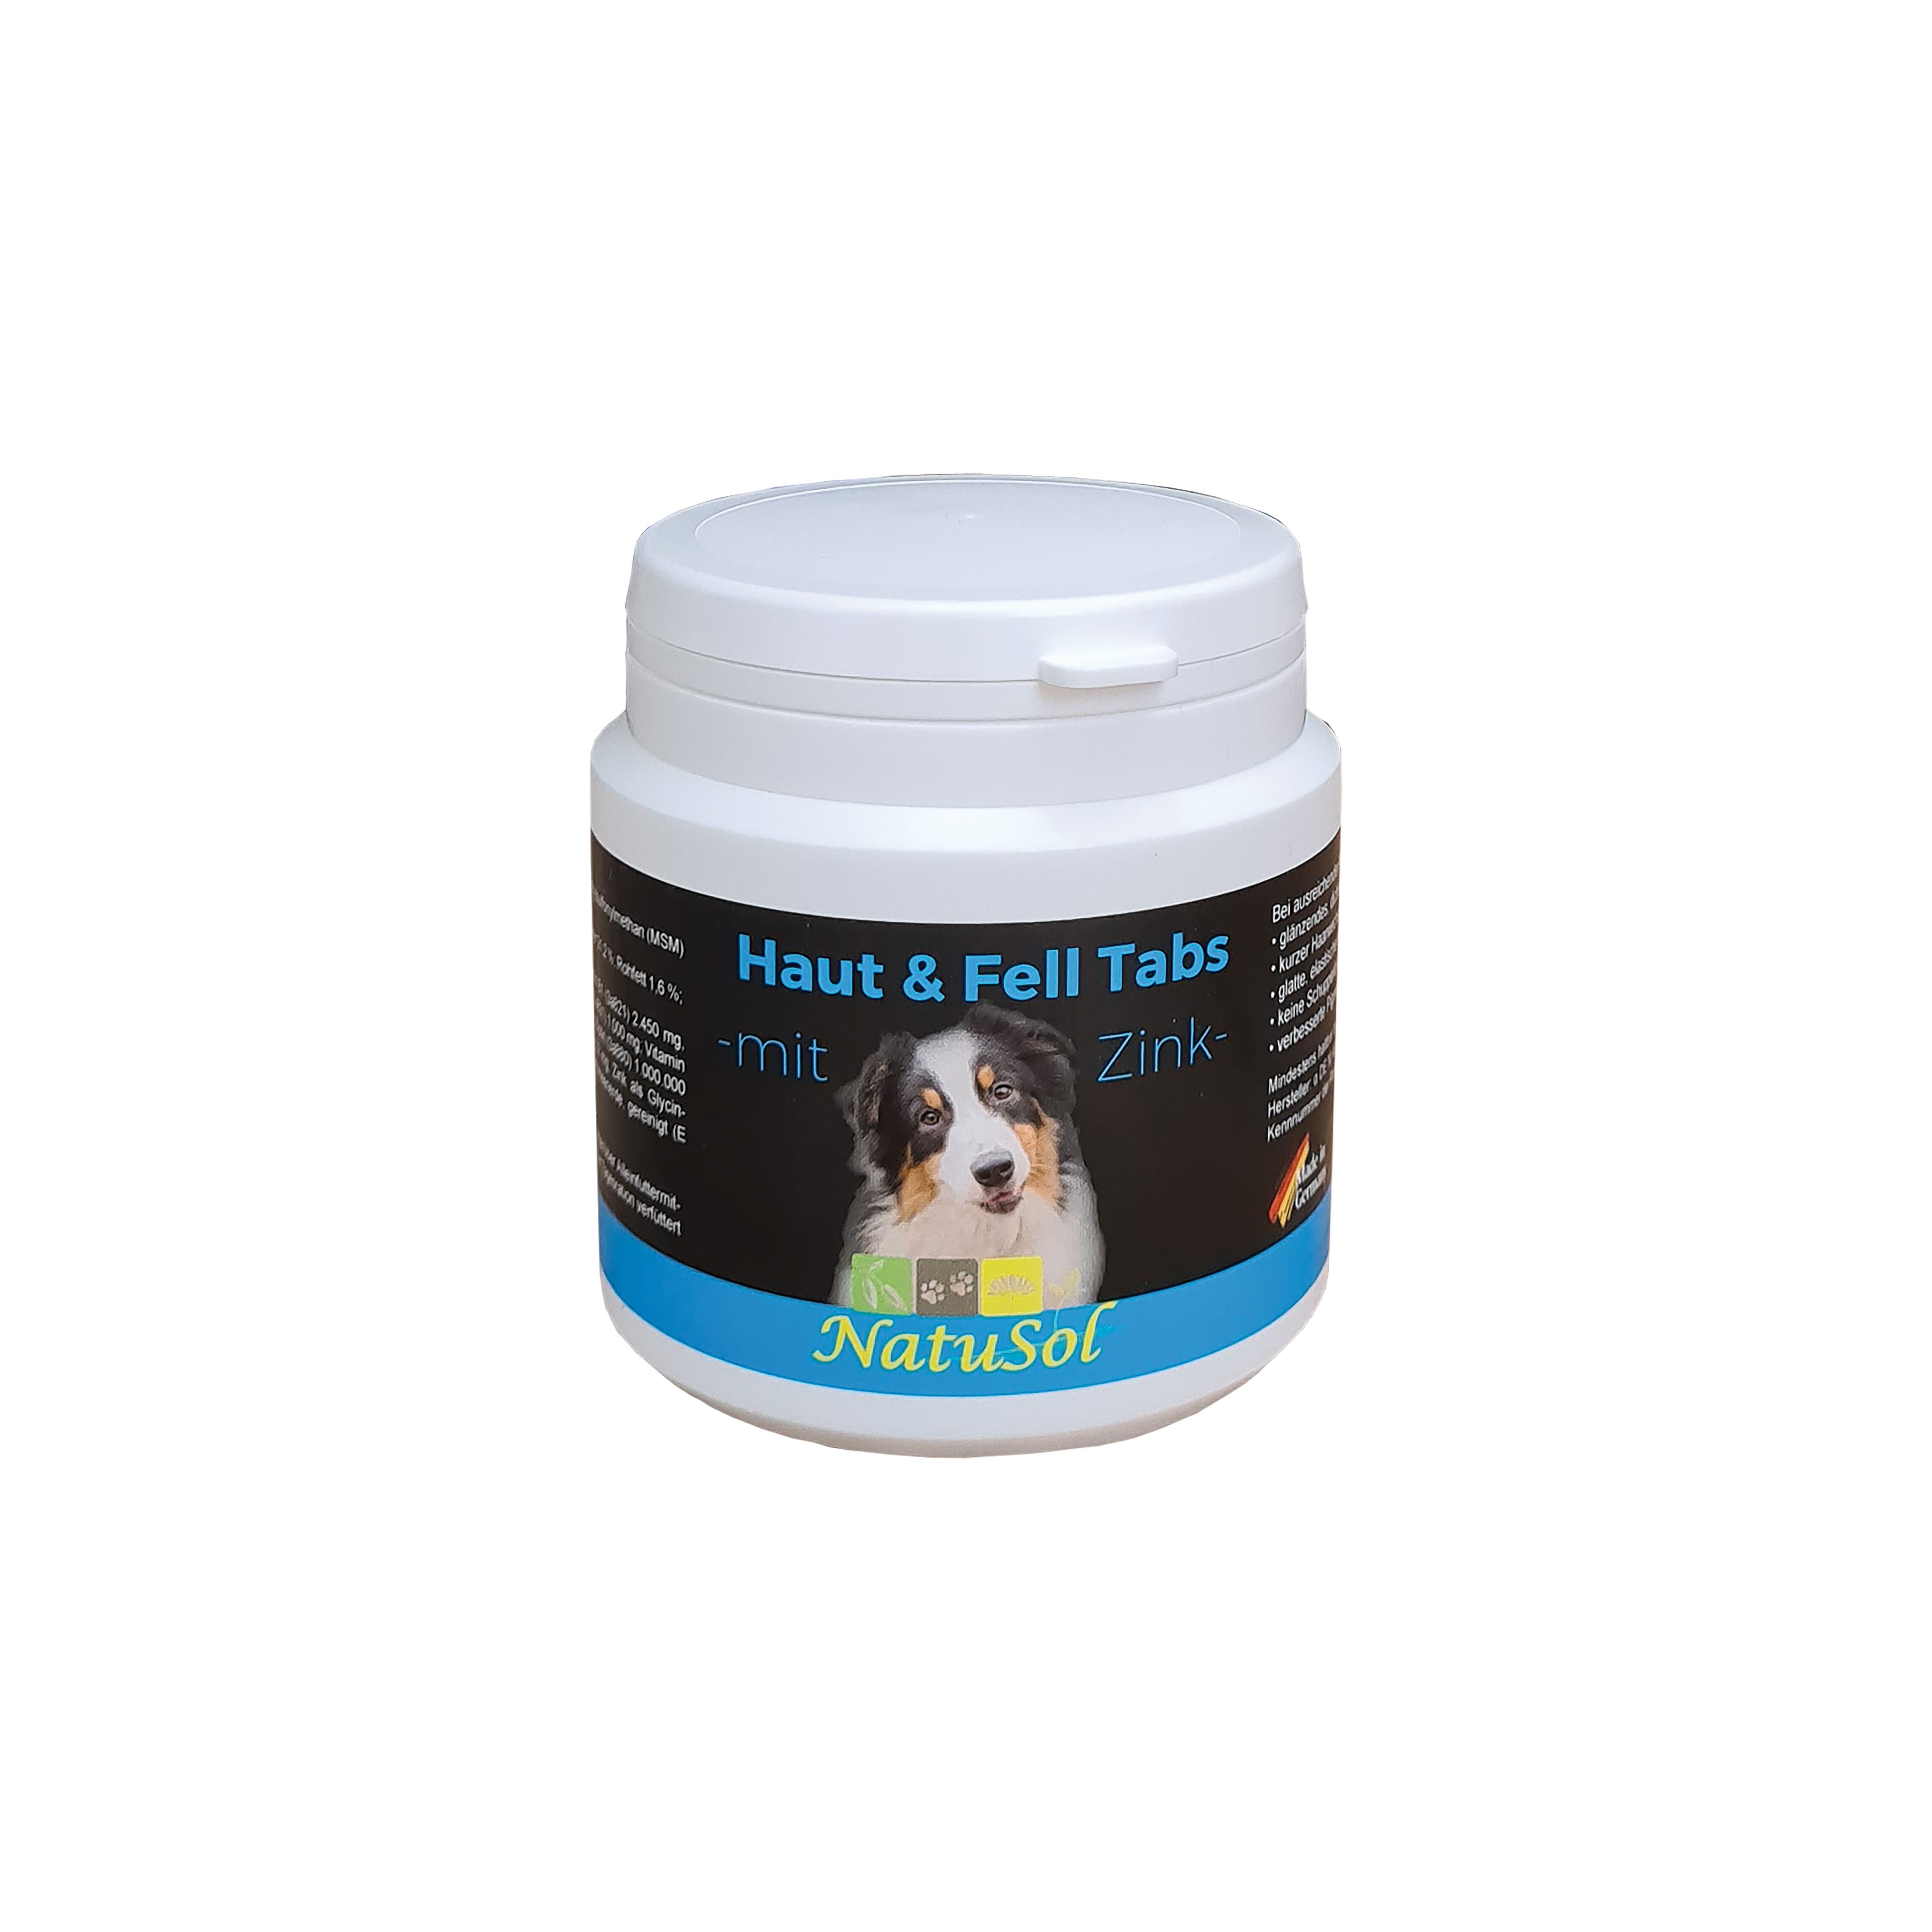 NatuSol Haut & Fell Tabs - mit Zink für Hunde